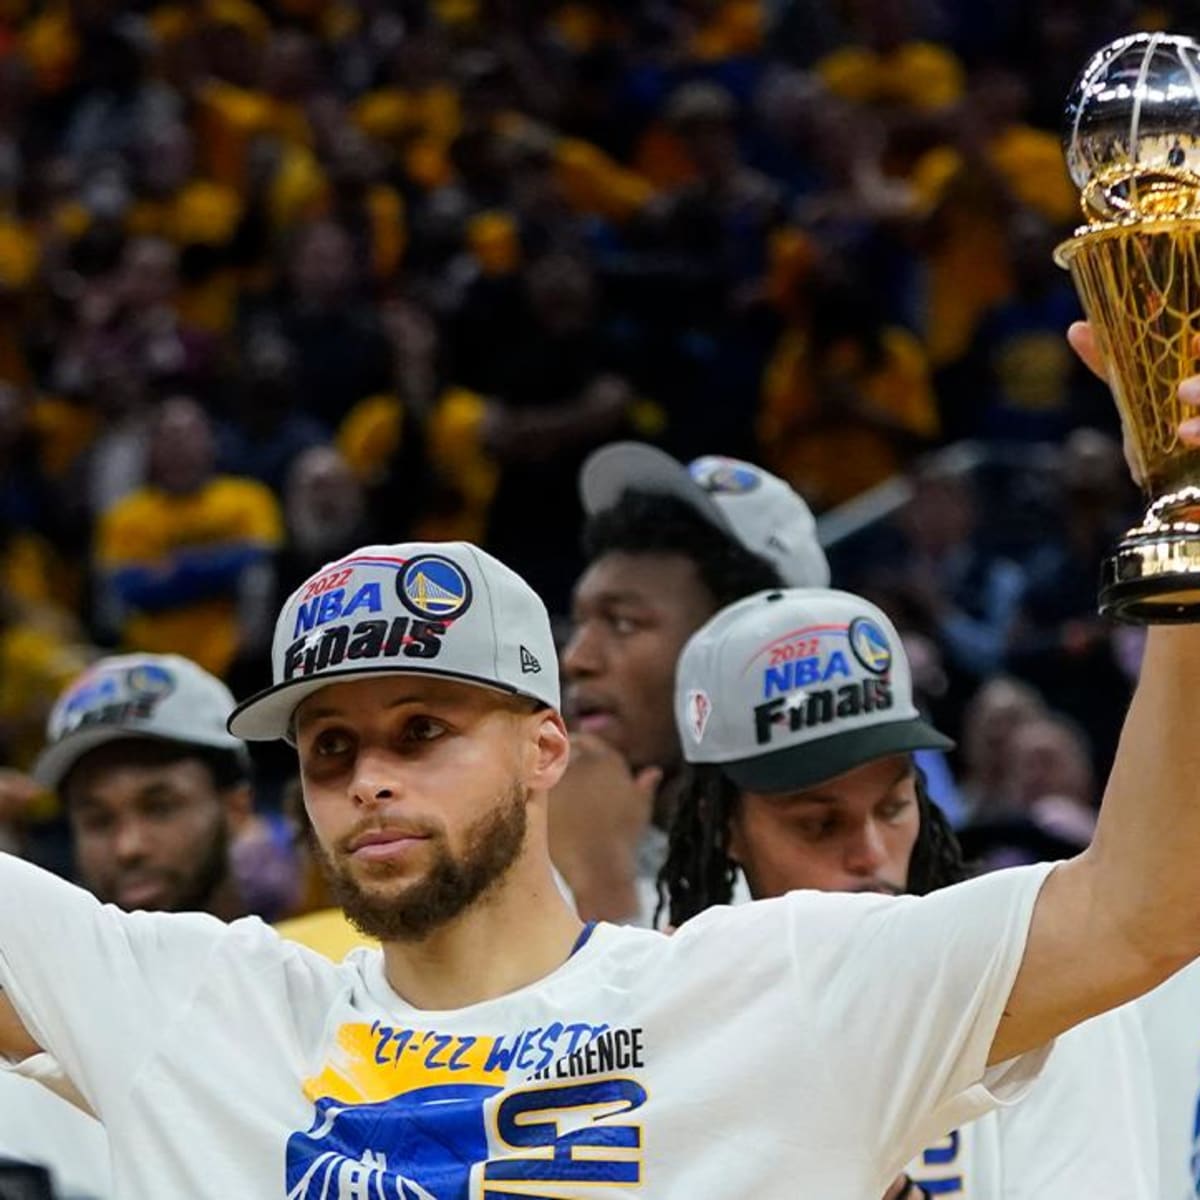 Steph Curry massive NBA Finals MVP favorite entering potential